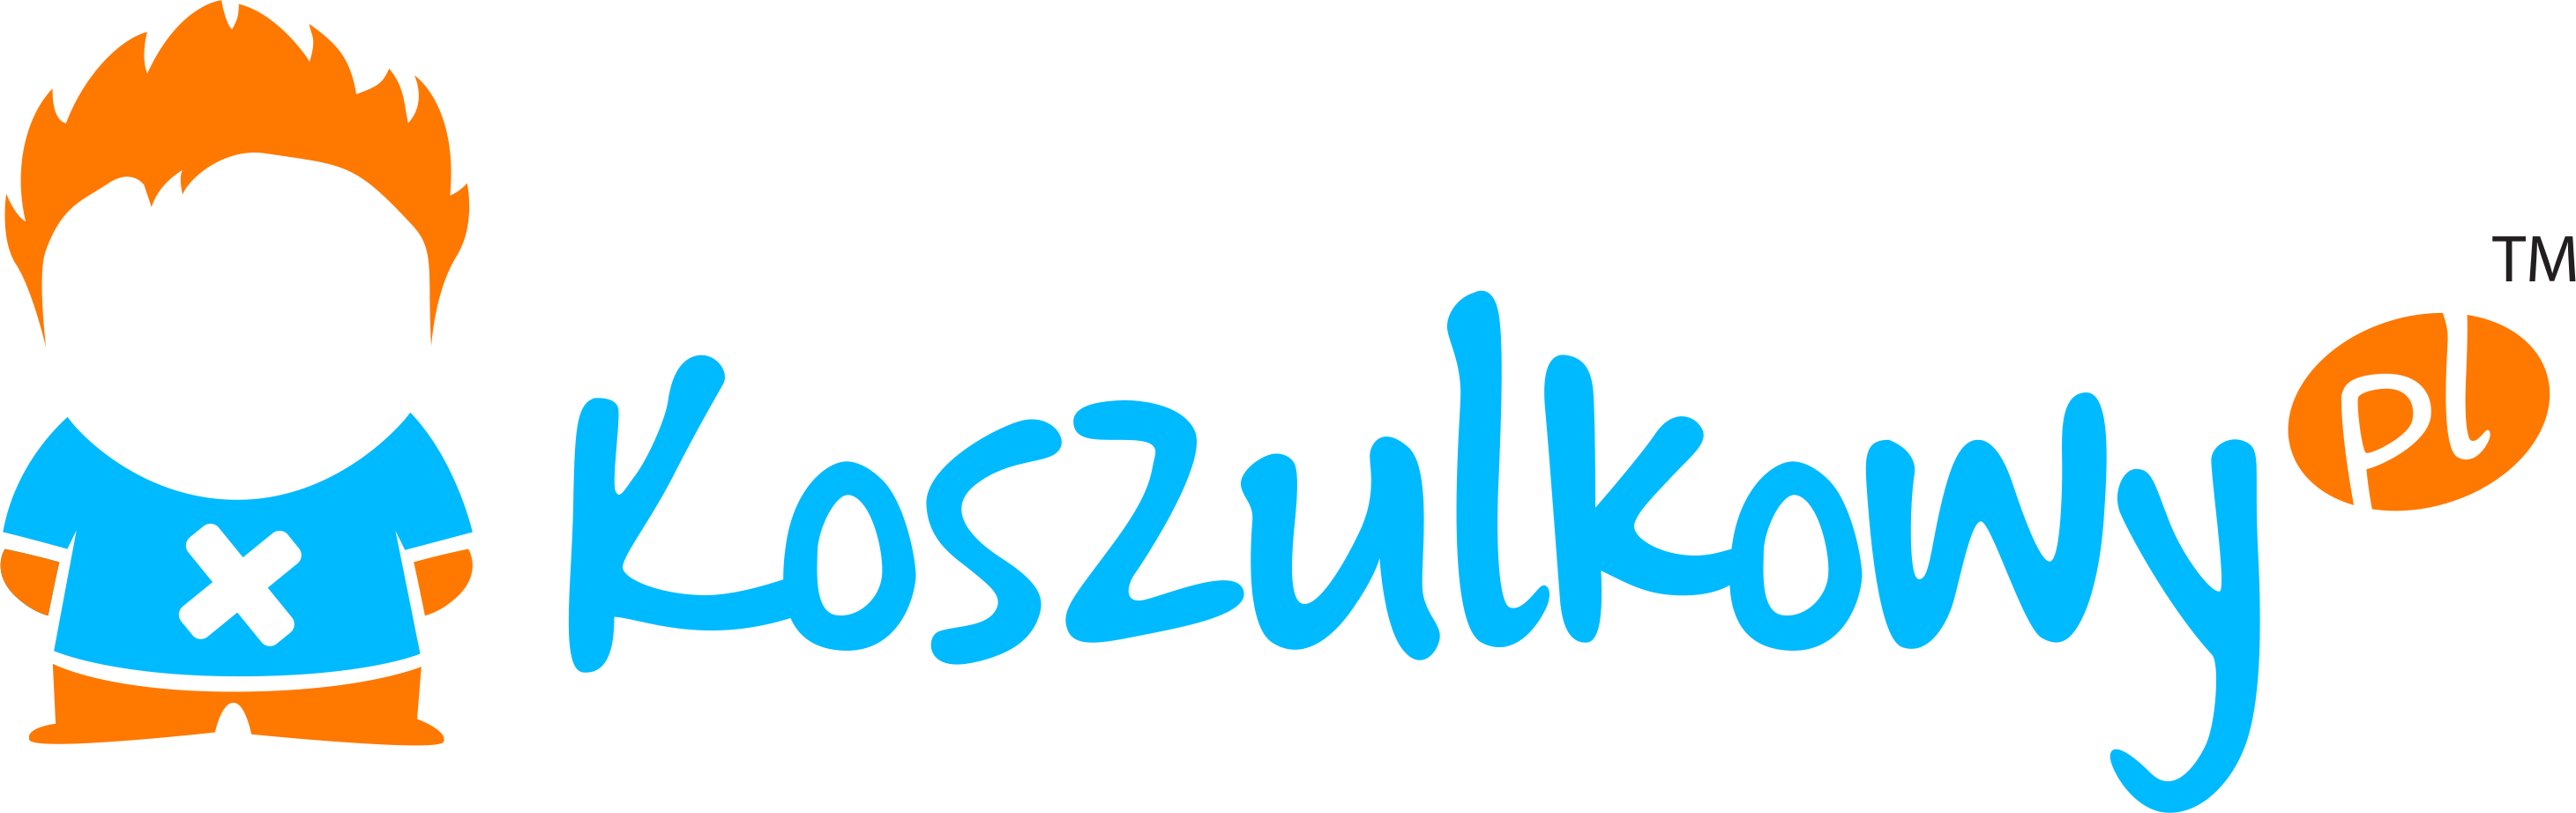 logo-koszulkowy_1.png